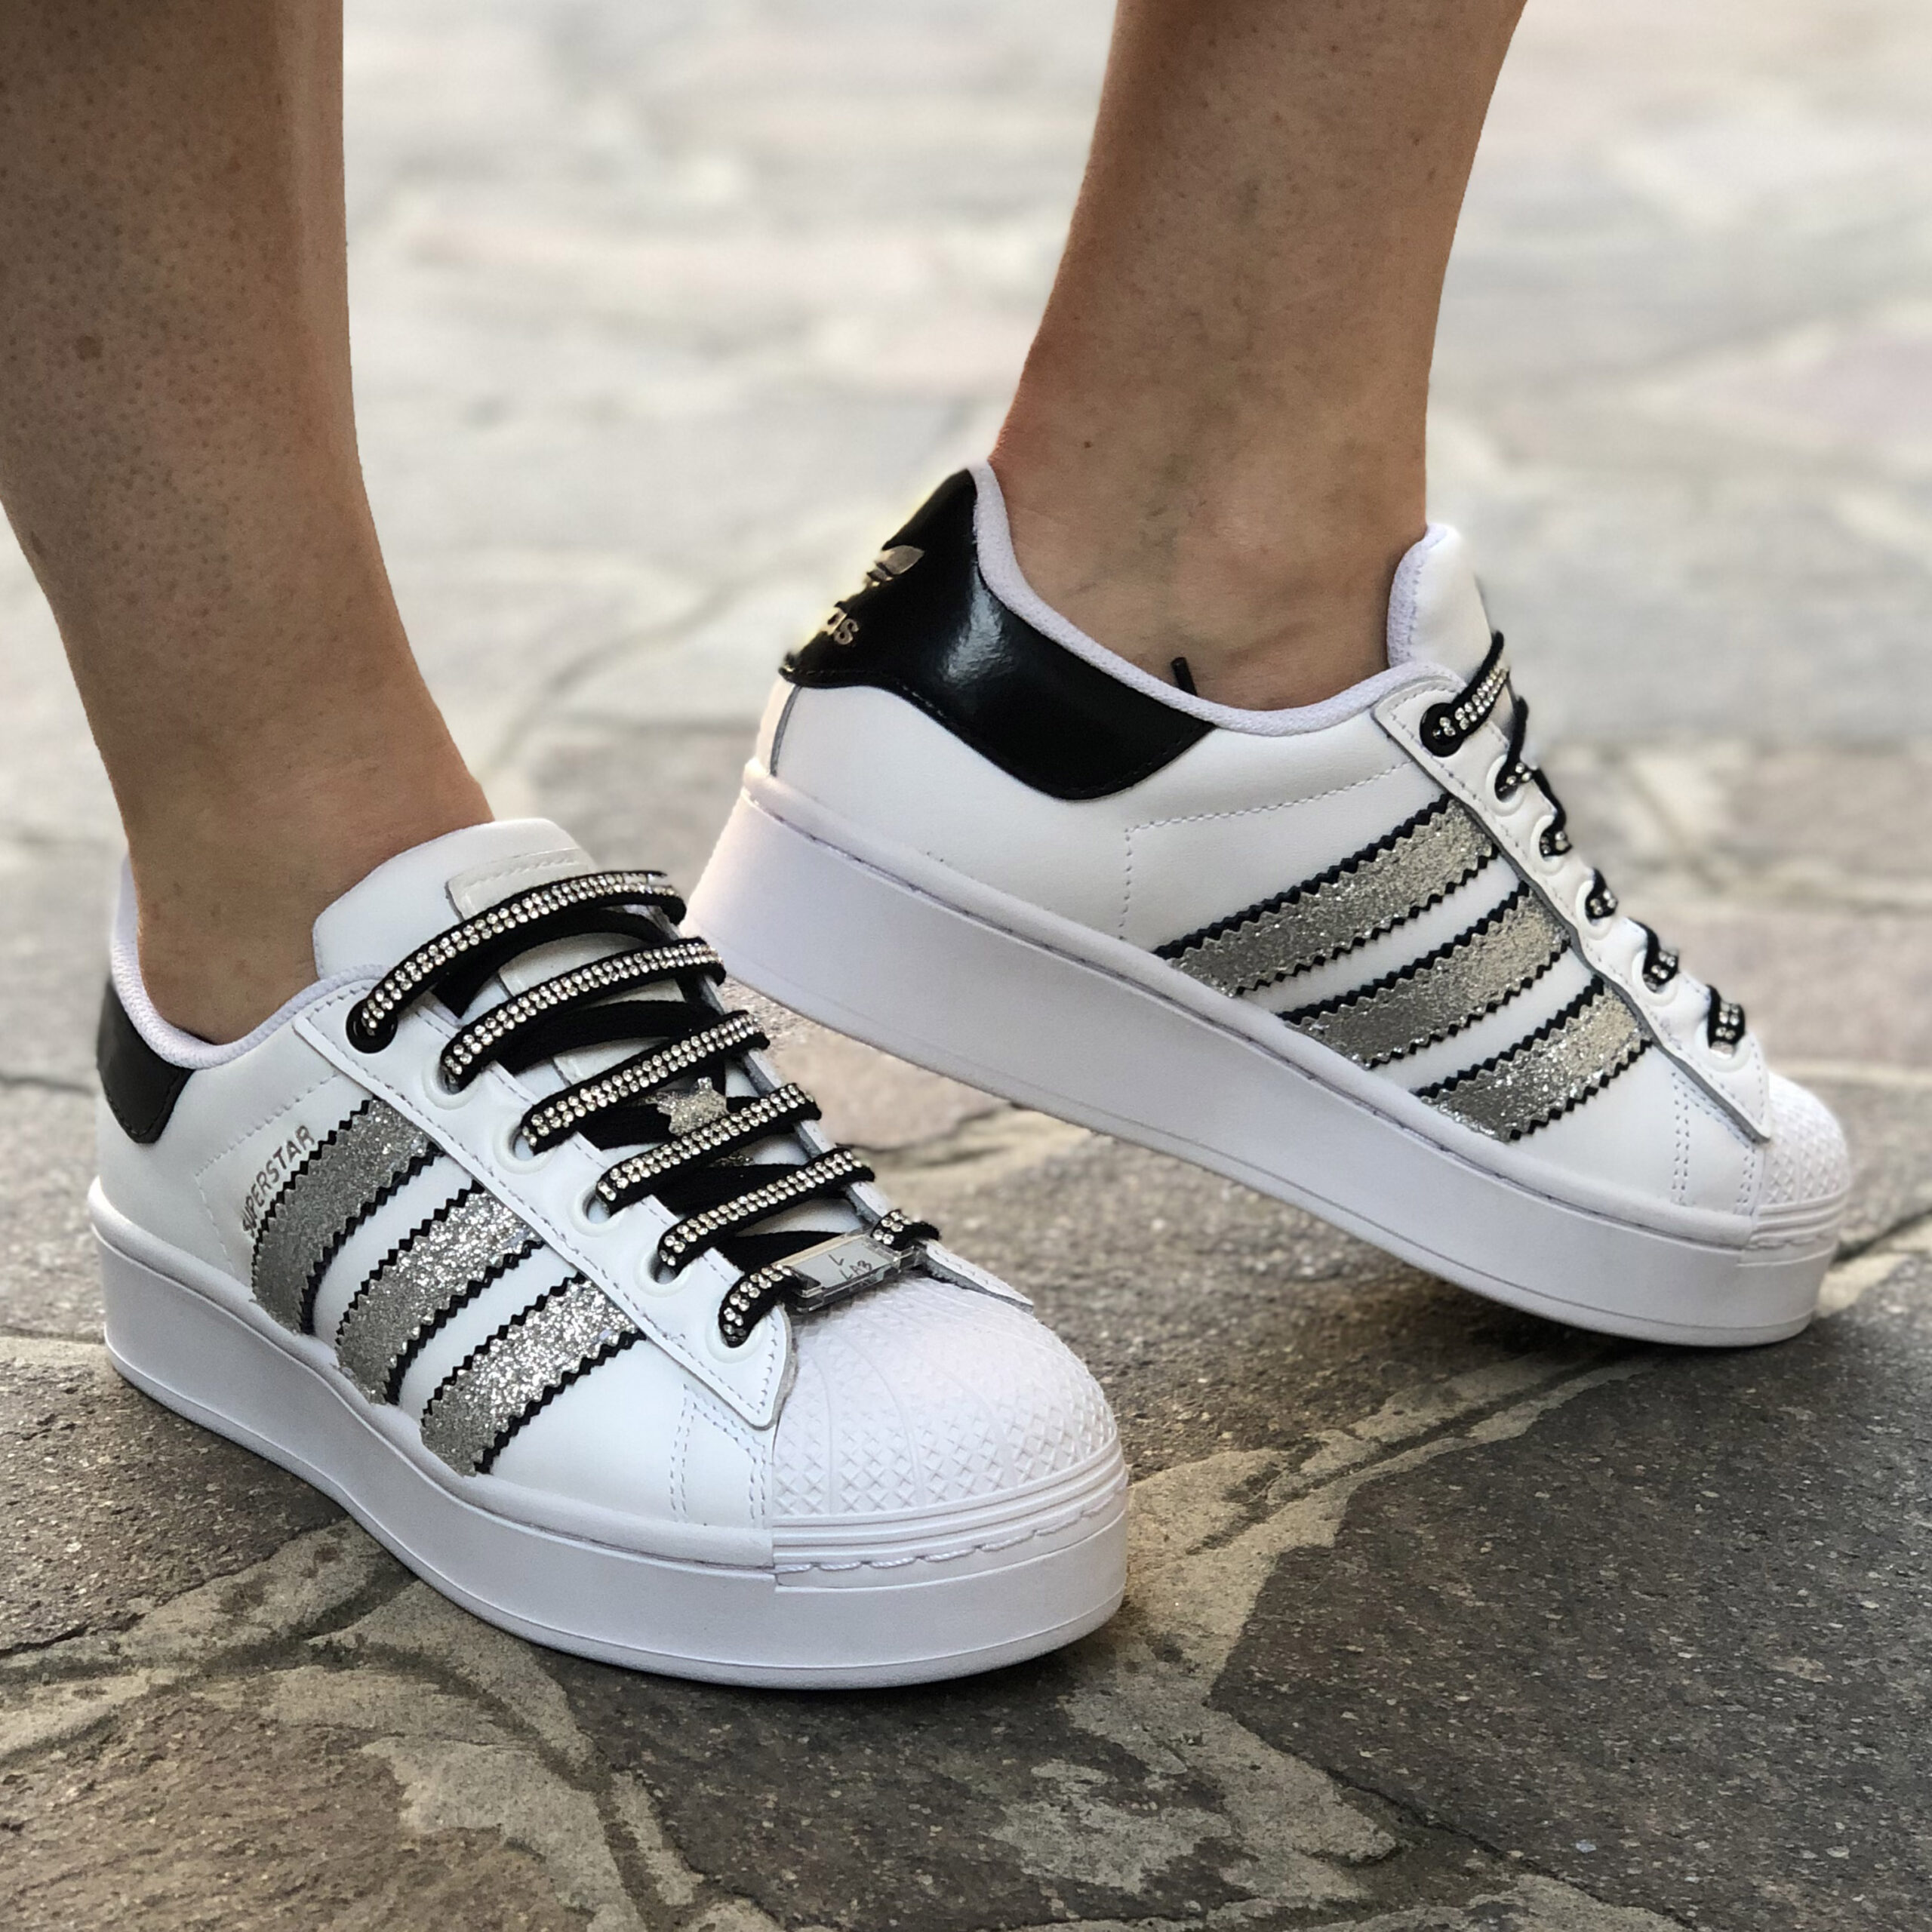 Adidas Superstar Custom Argento e LLab scarpe custom